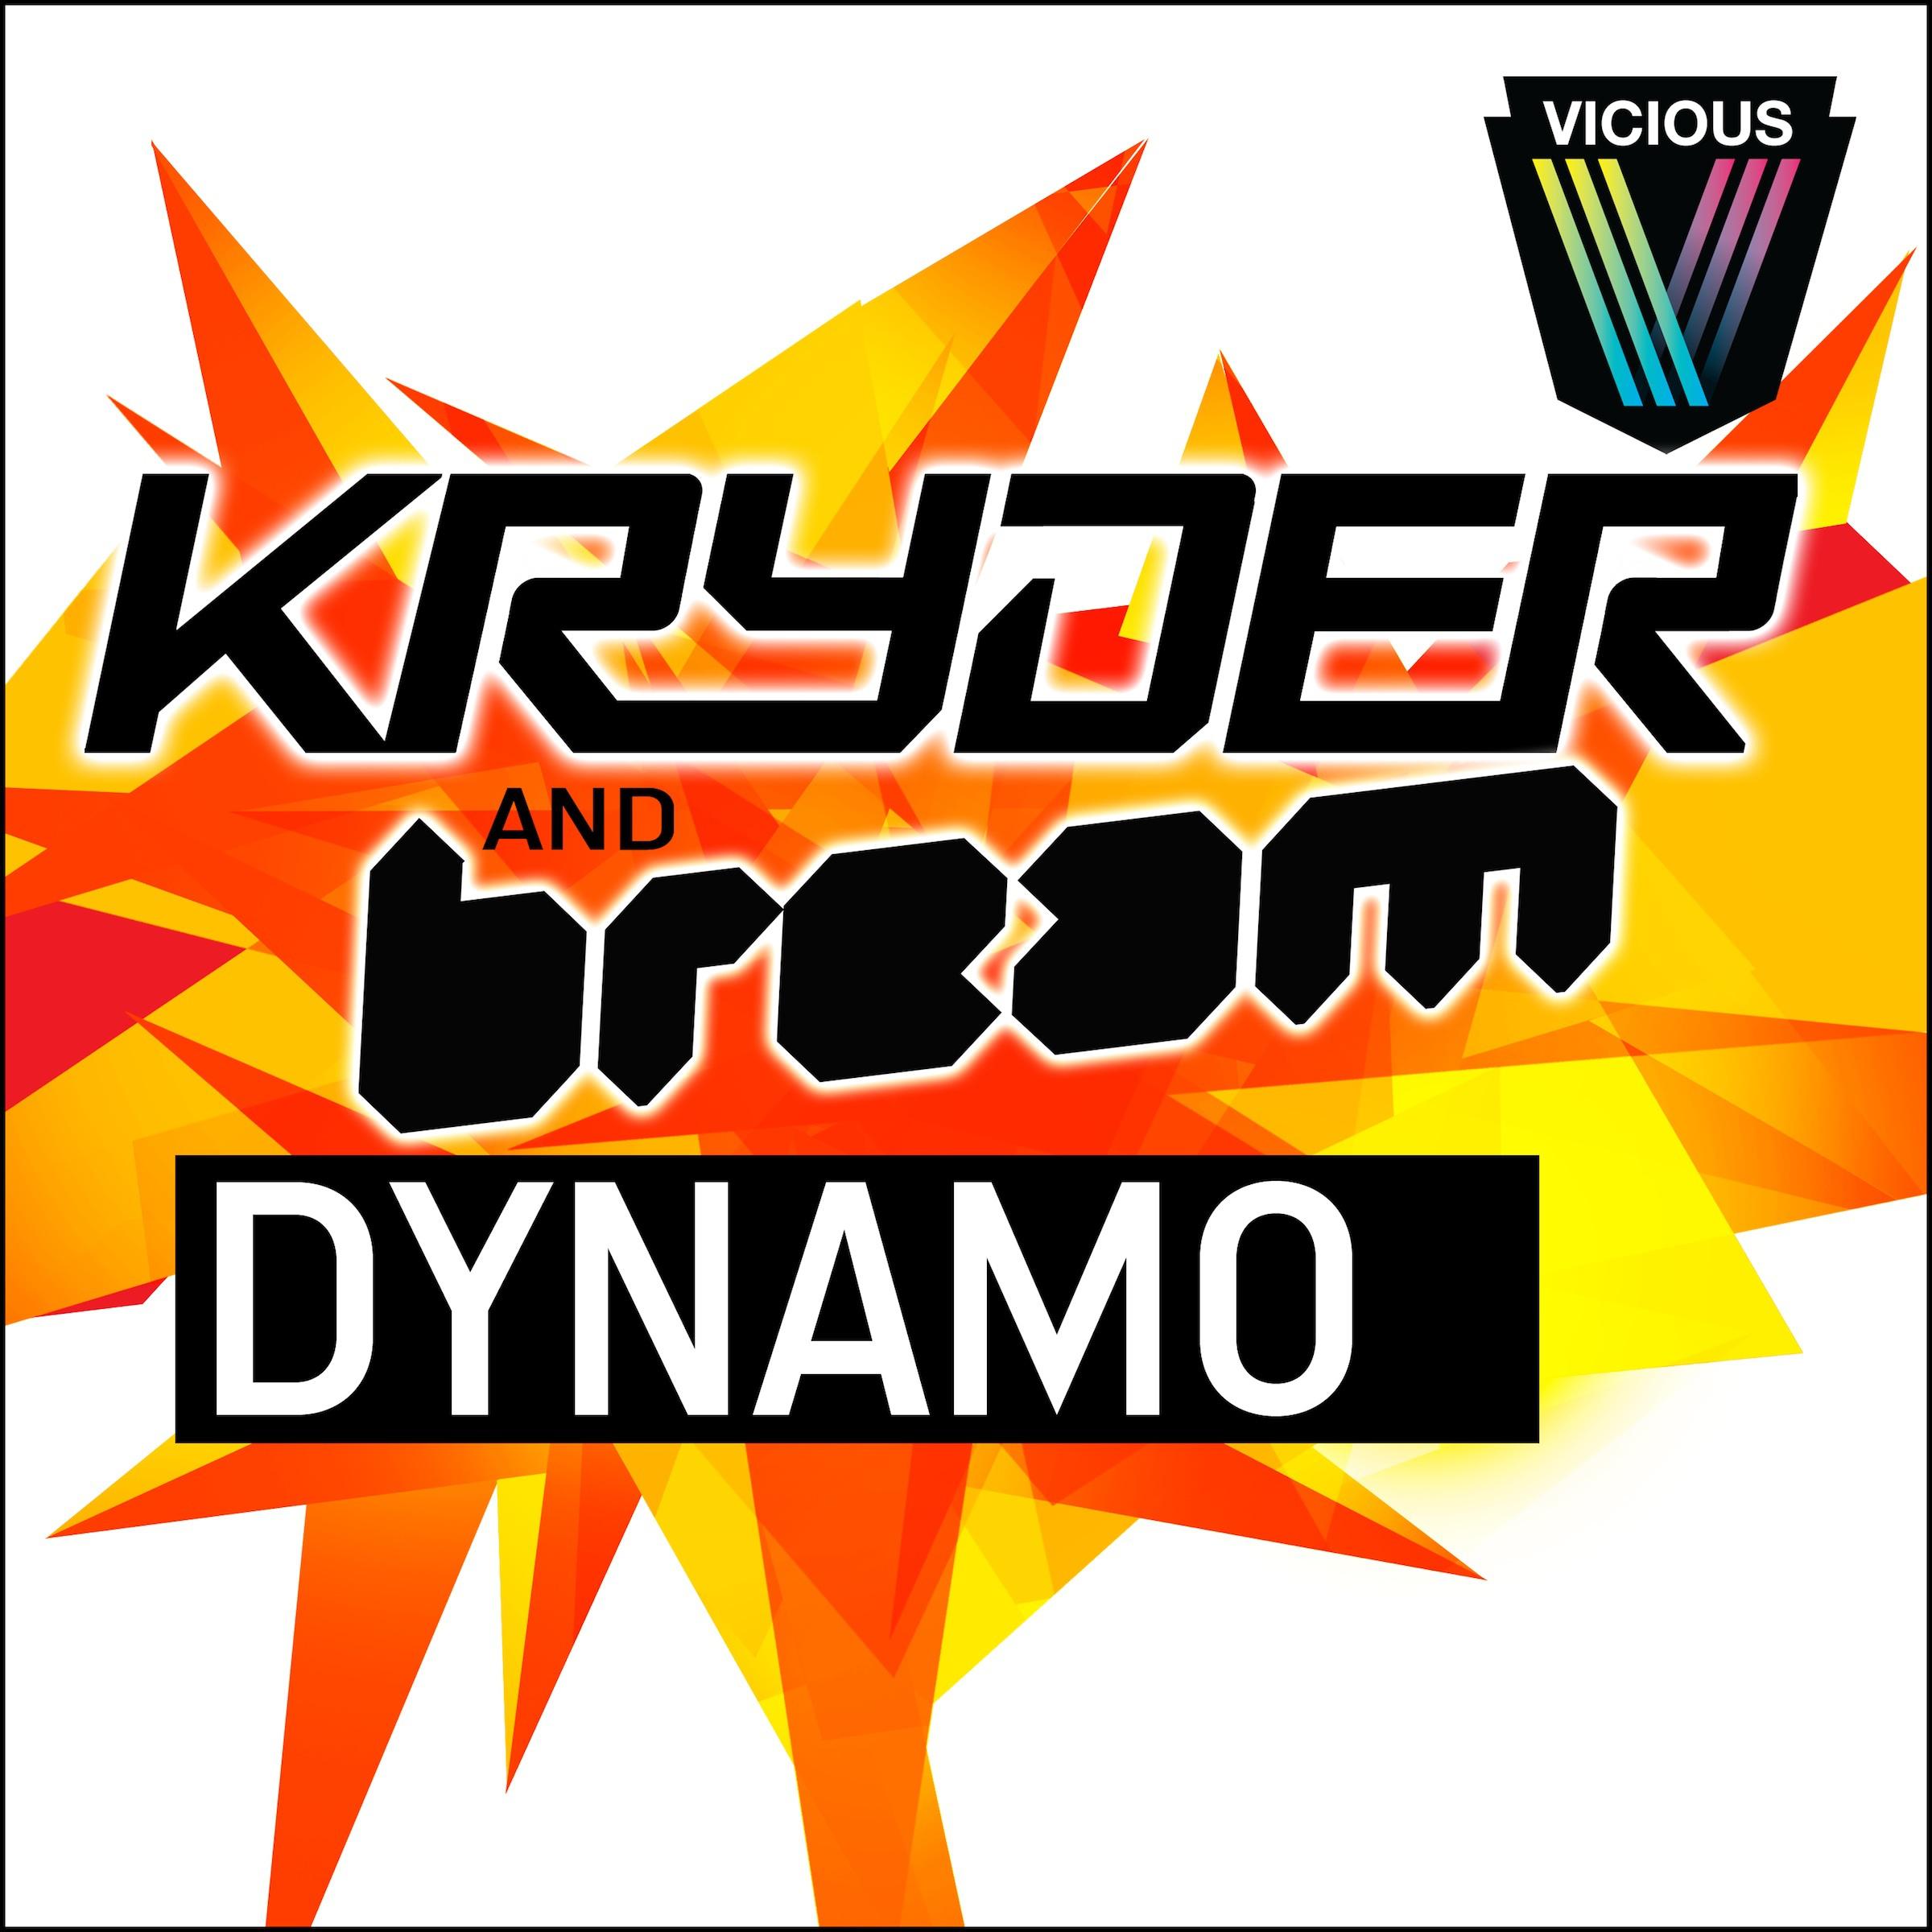 Kryder - Dynamo (Original Mix)